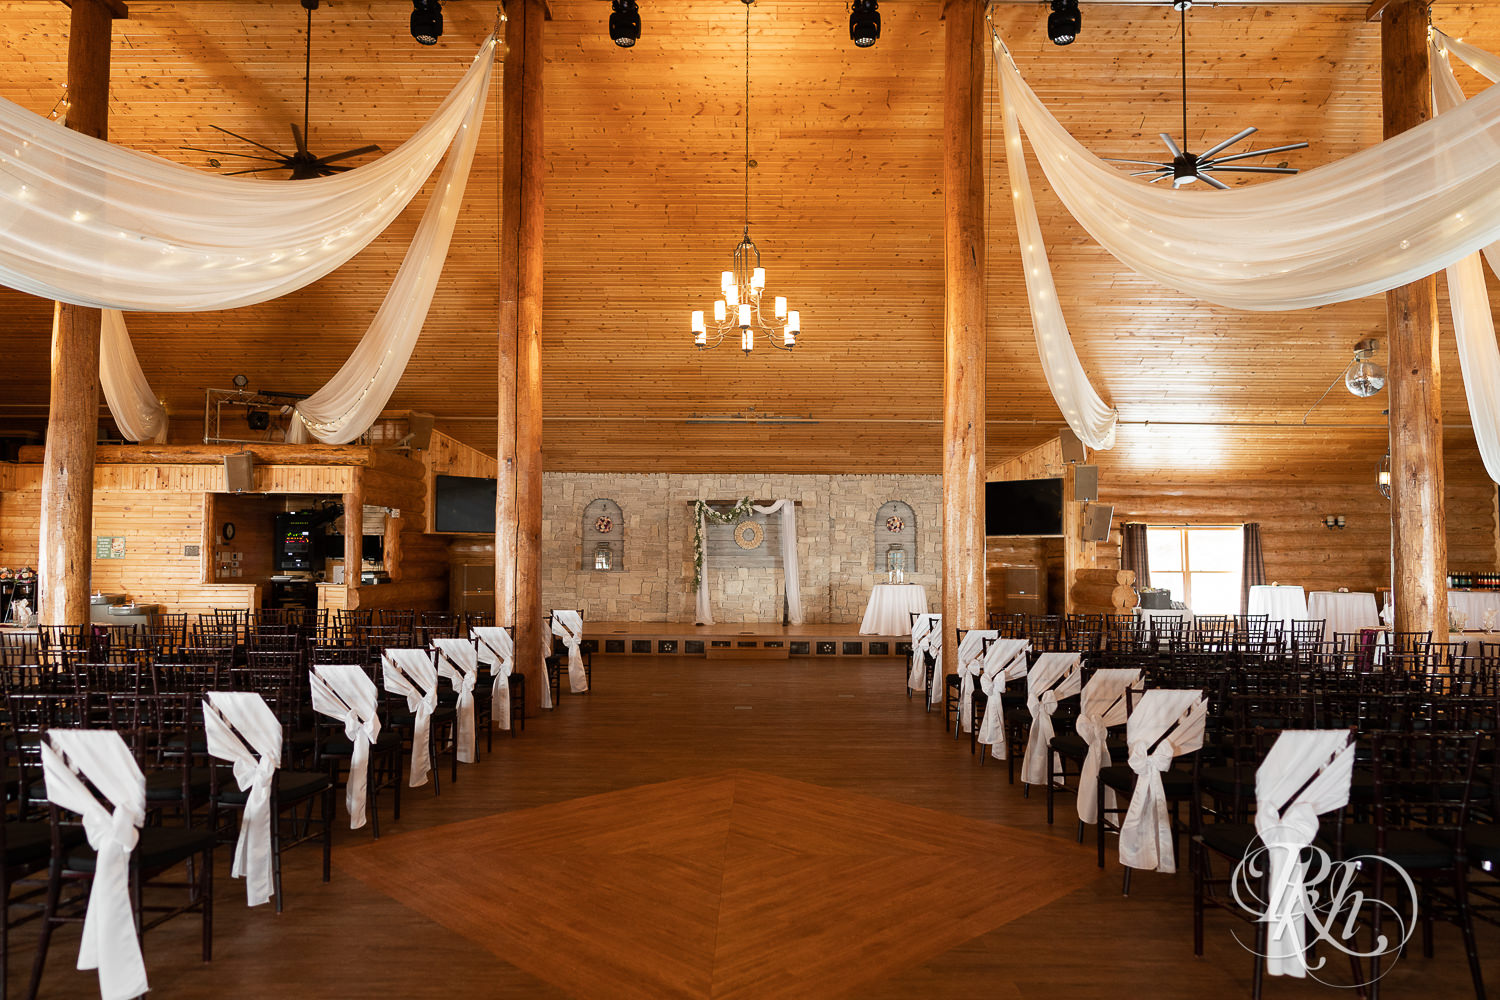 Indoor ceremony setup for winter wedding at Glenhaven Events in Farmington, Minnesota.